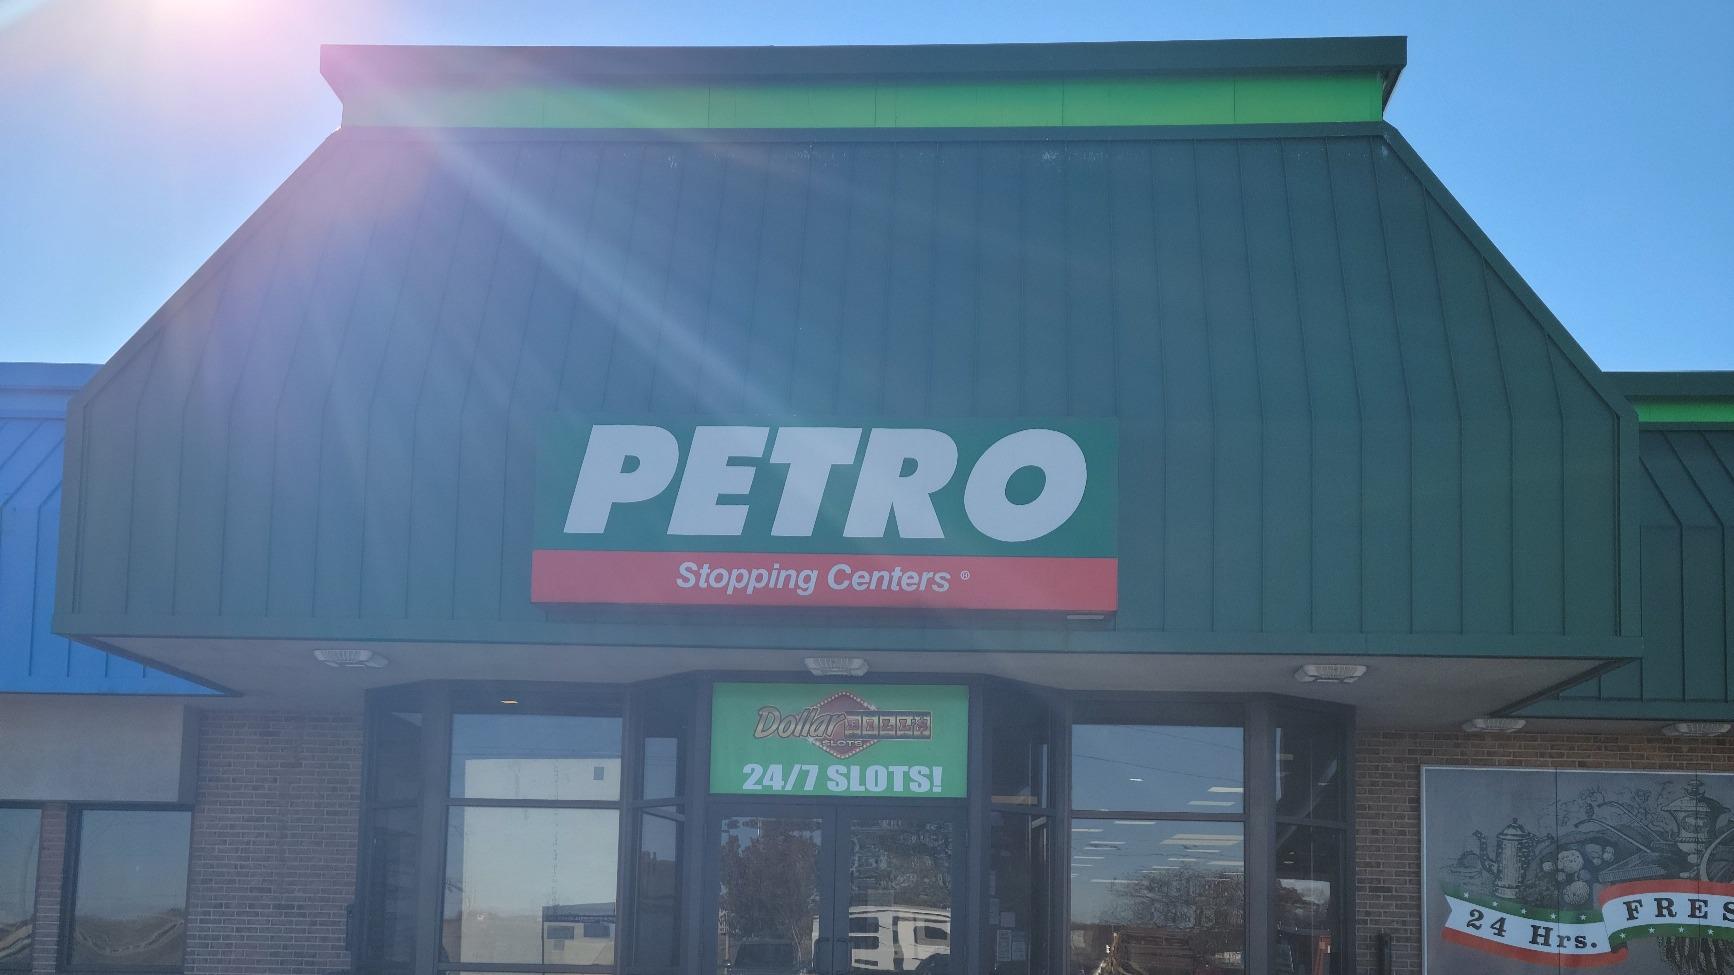 Petro Travel Center